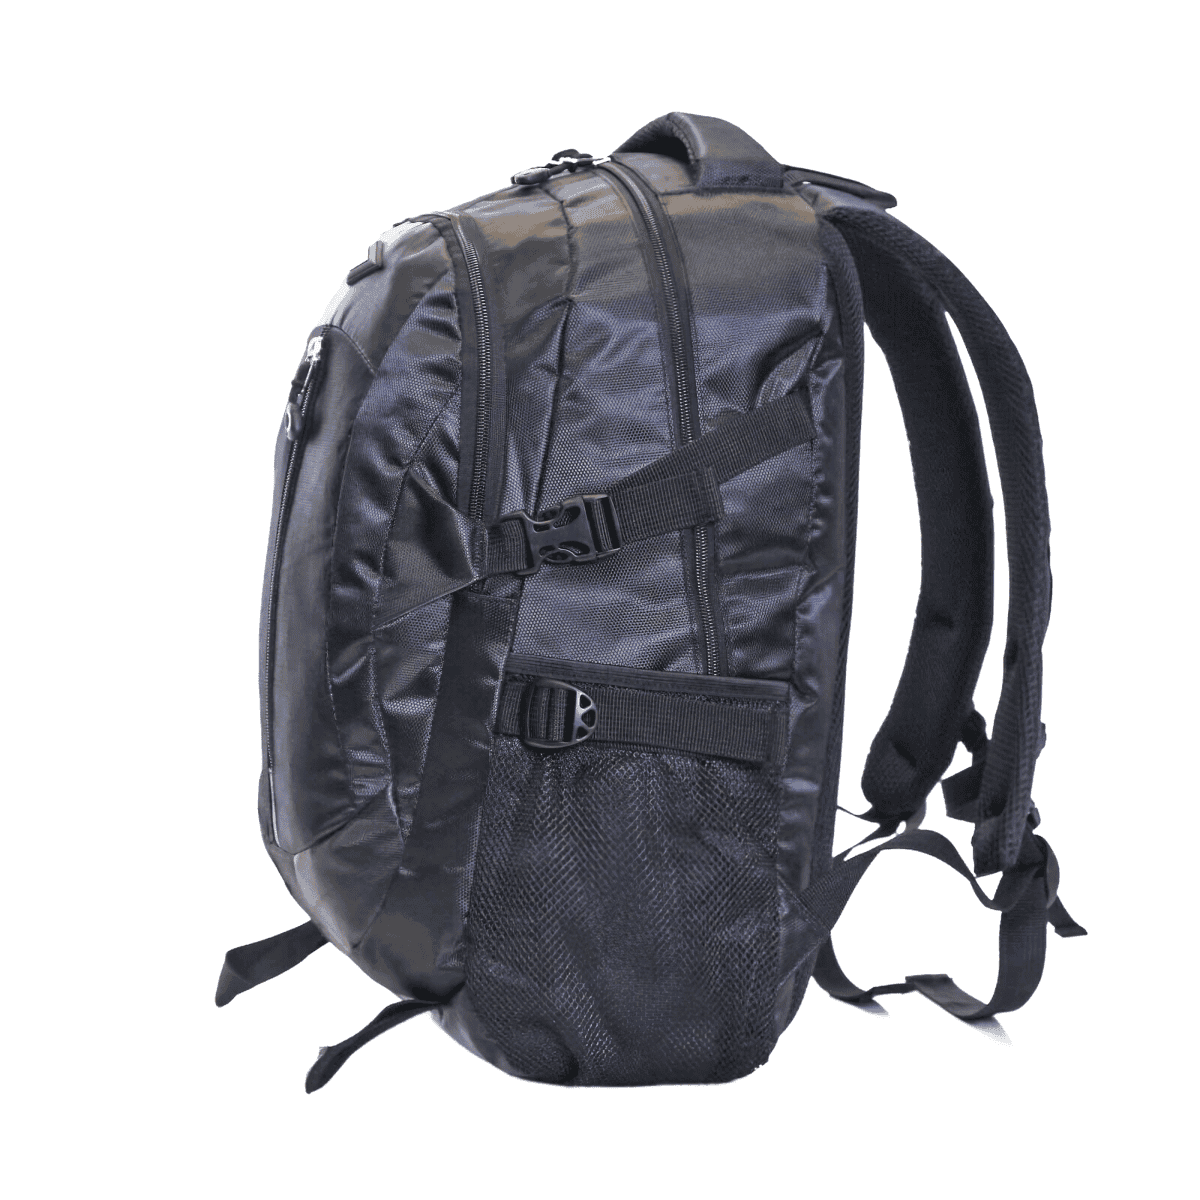 Black High Quality Rucksack Ultimate Comfort Backpack - Backpacks & School Bags by Stonehenge